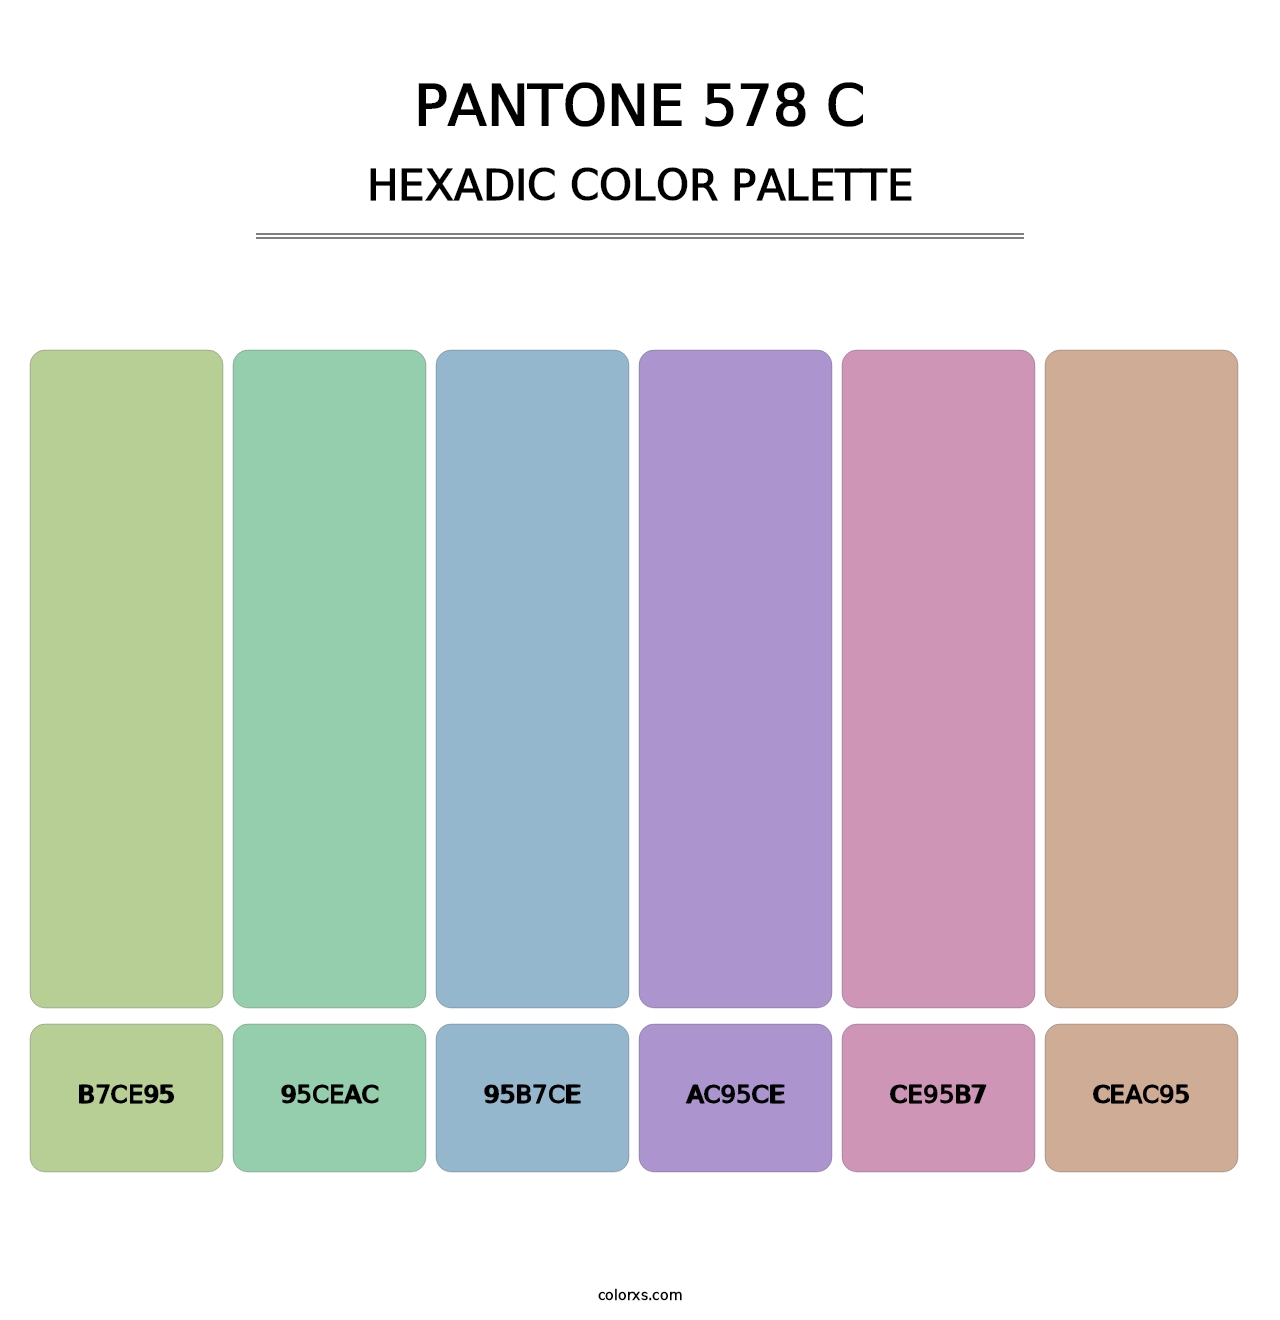 PANTONE 578 C - Hexadic Color Palette